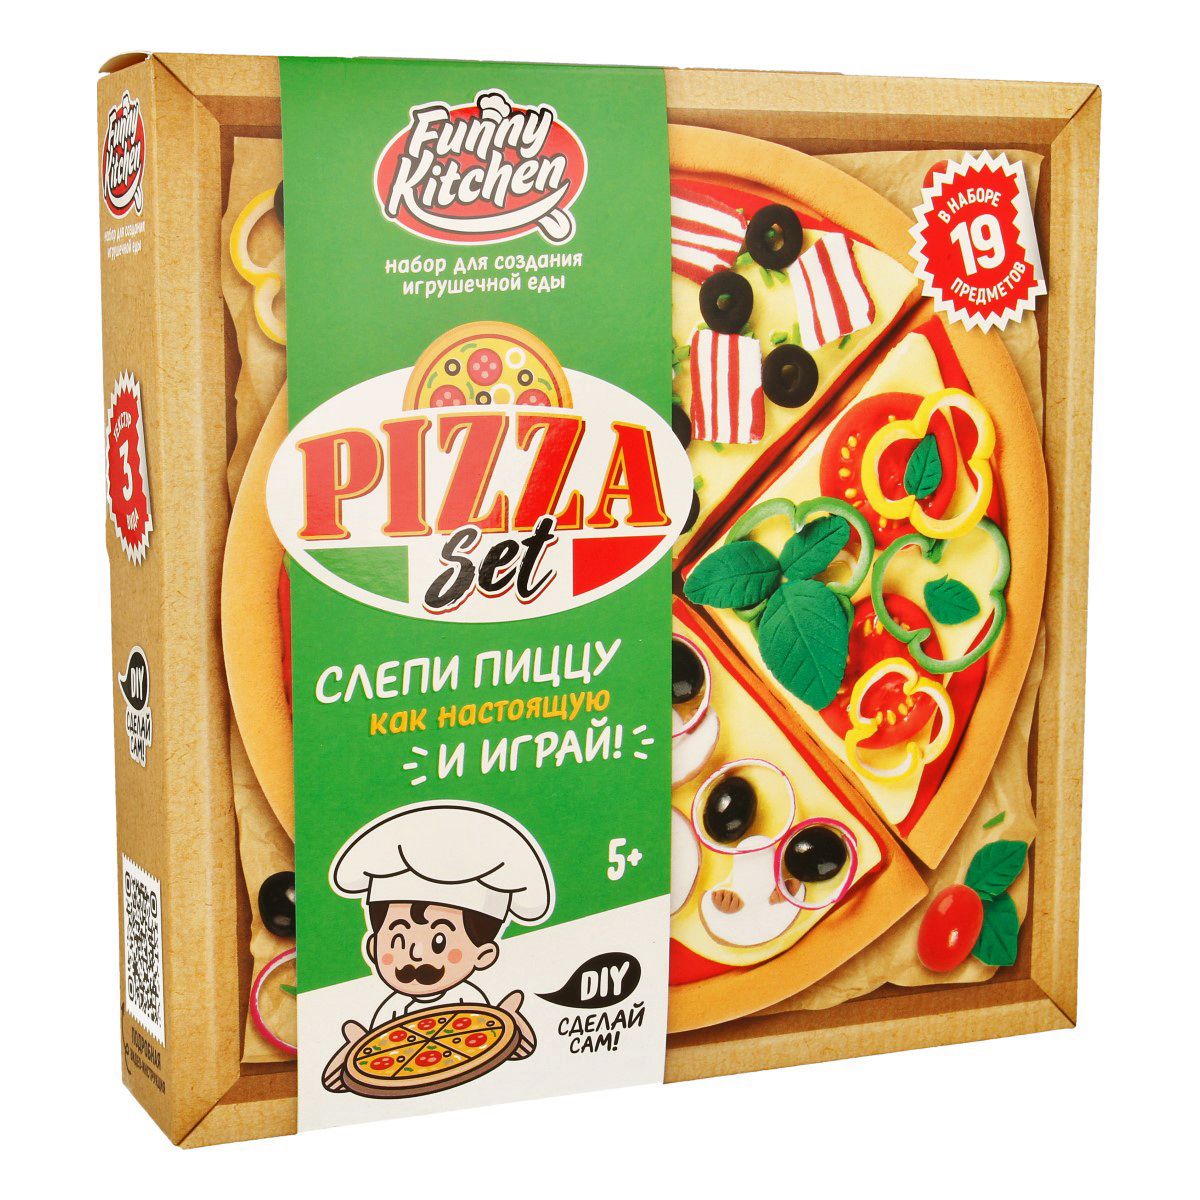 Набор для опытов Funny Kitchen "Pizza set" 150 гр легкий пластилин, слайм, тесто